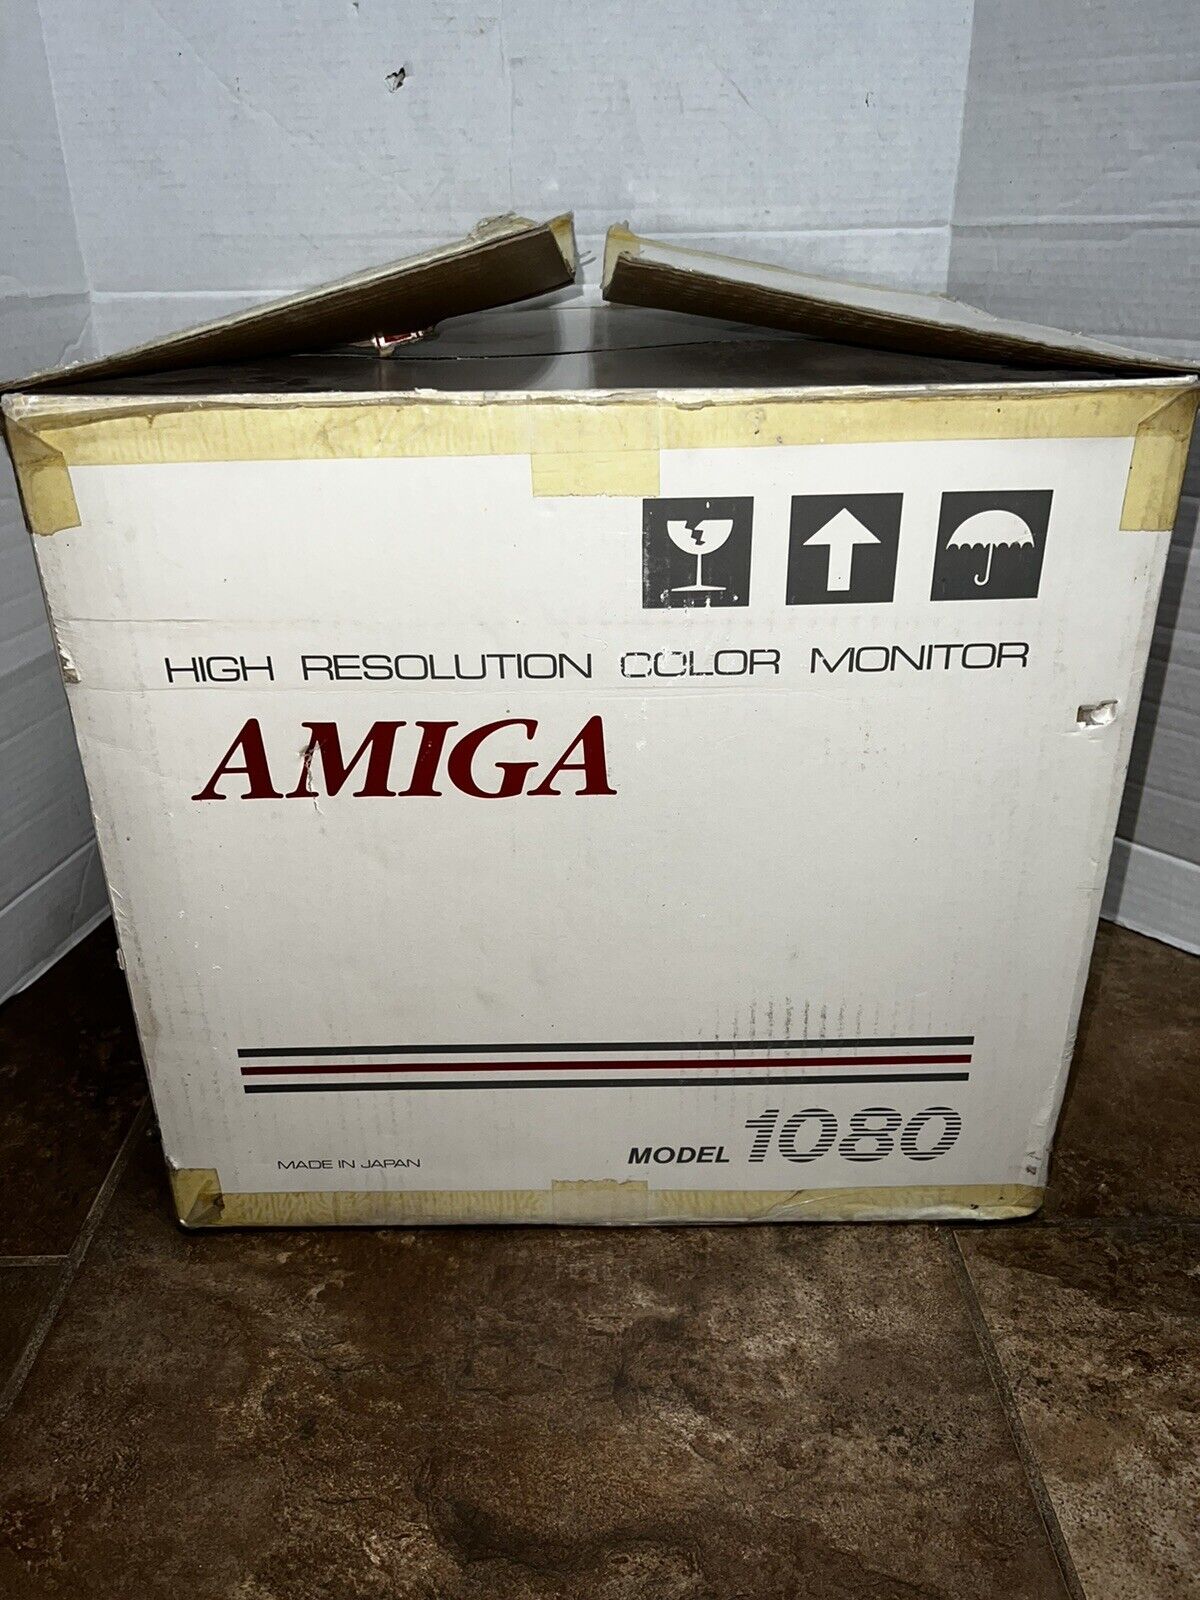 Vintage Commodore Amiga Model 1080 Computer/Video Game Monitor With Original Box